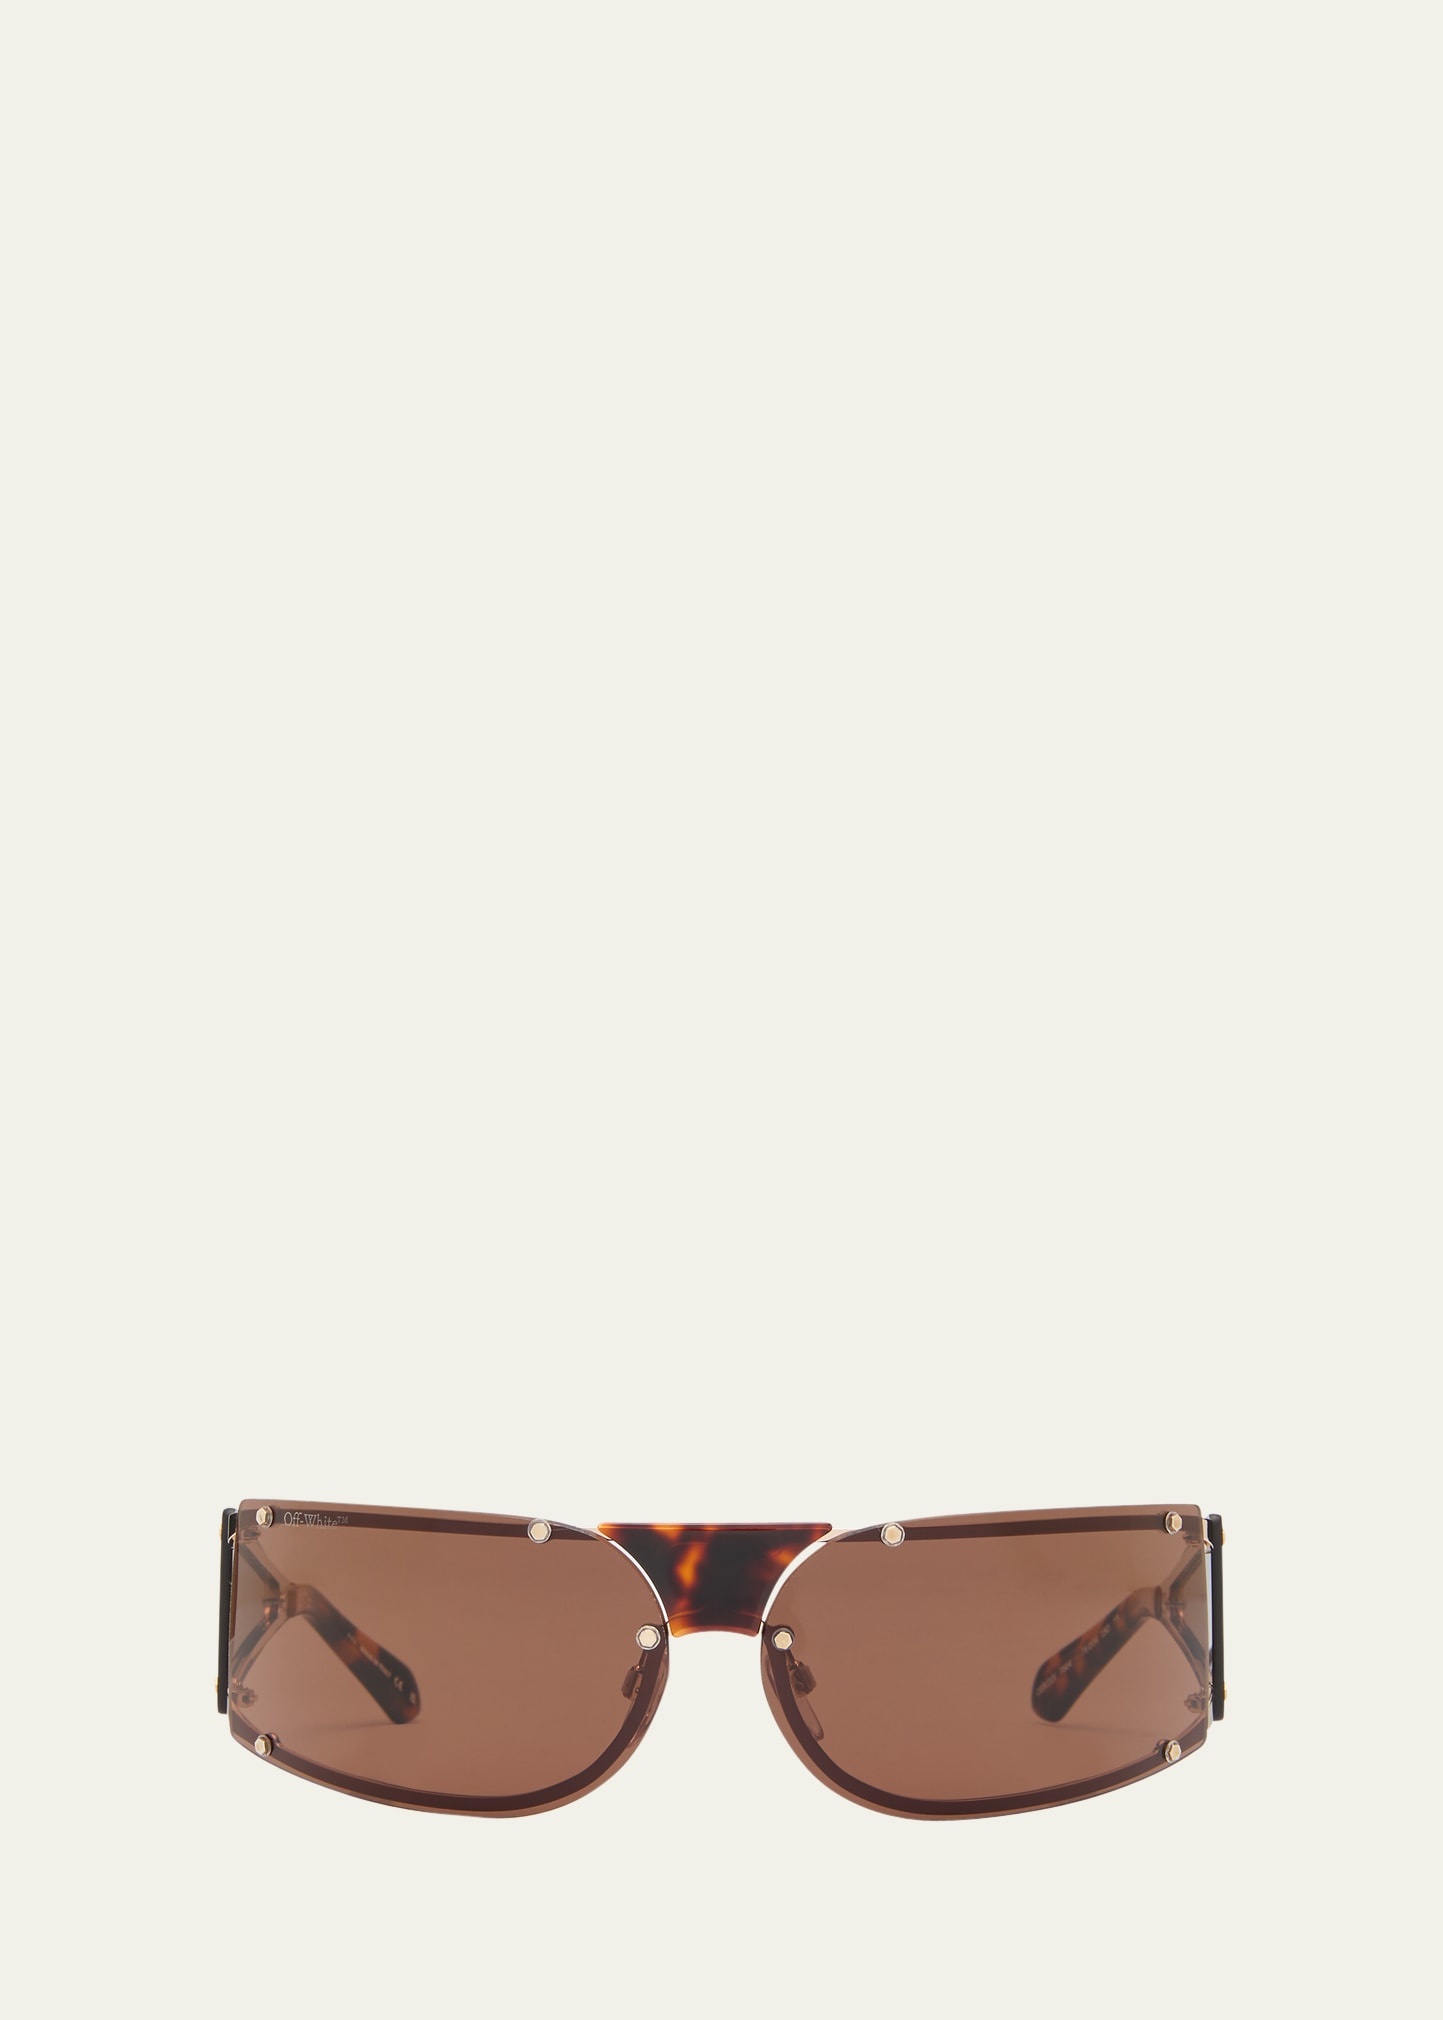 Off-white Kenema Mixed-media Wrap Sunglasses In Brown